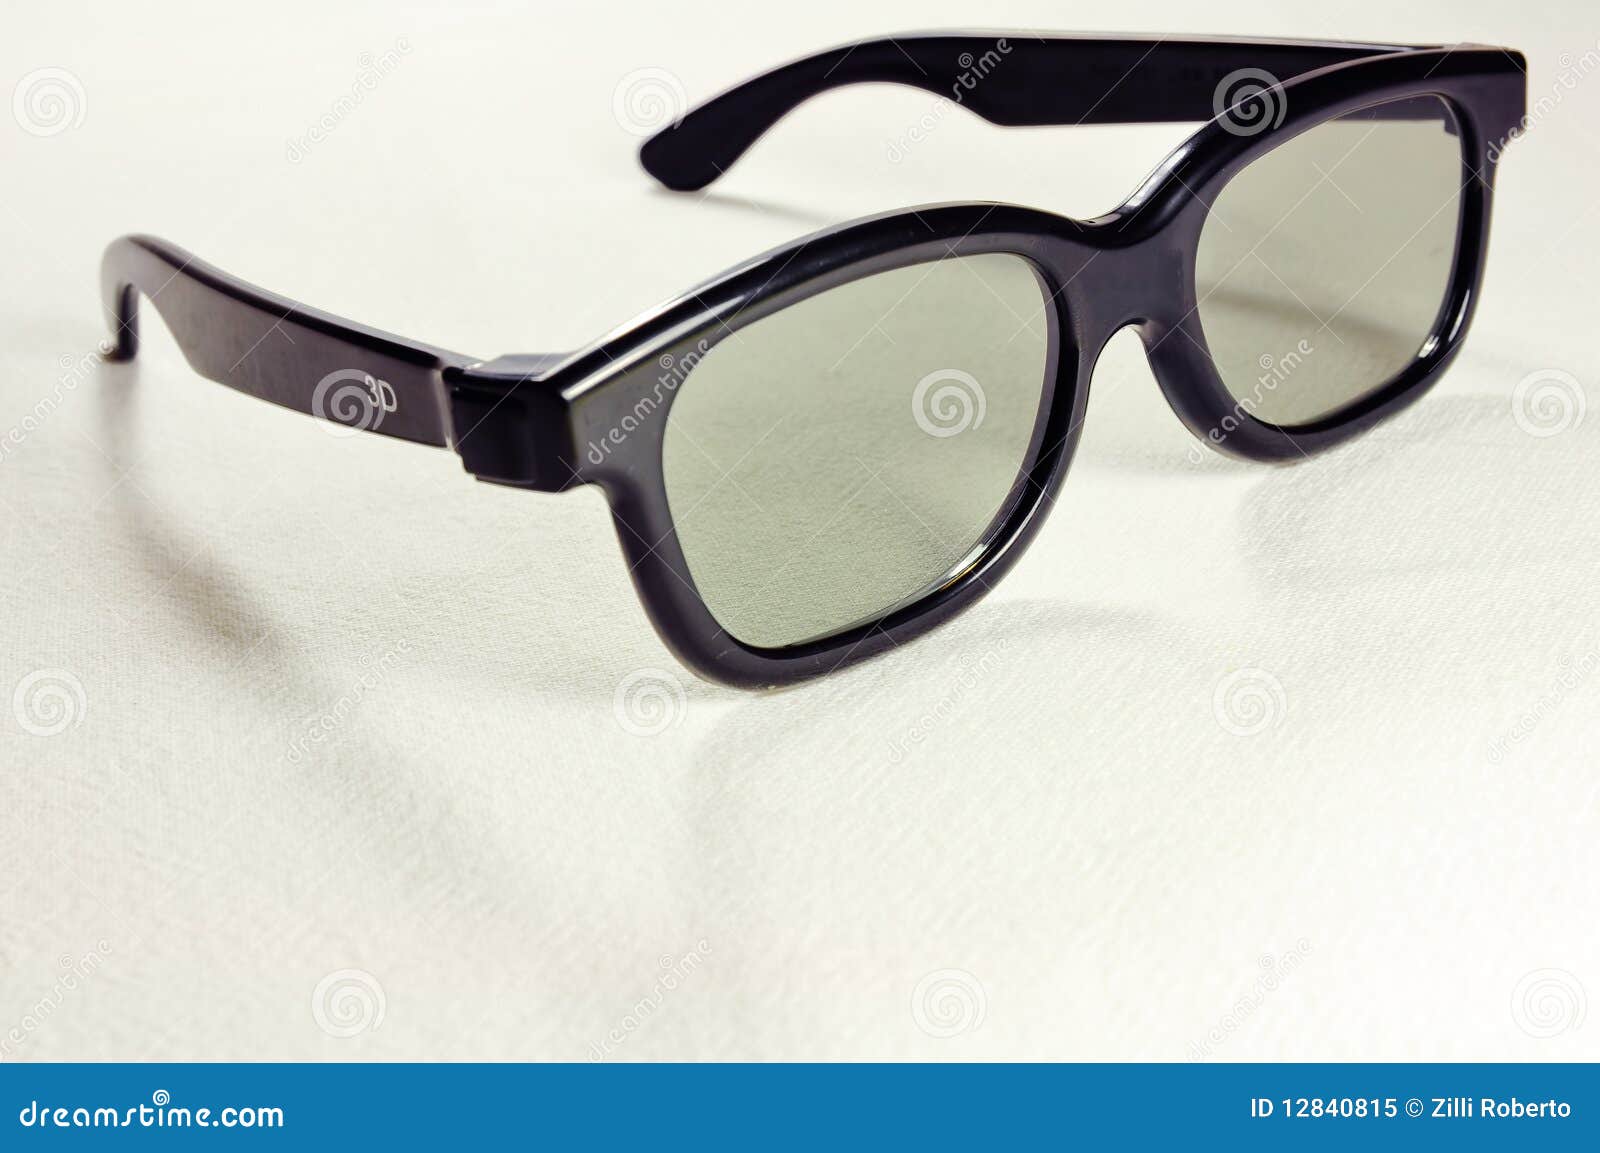 3d glasses stock image. Image of white, movie, background - 12840815